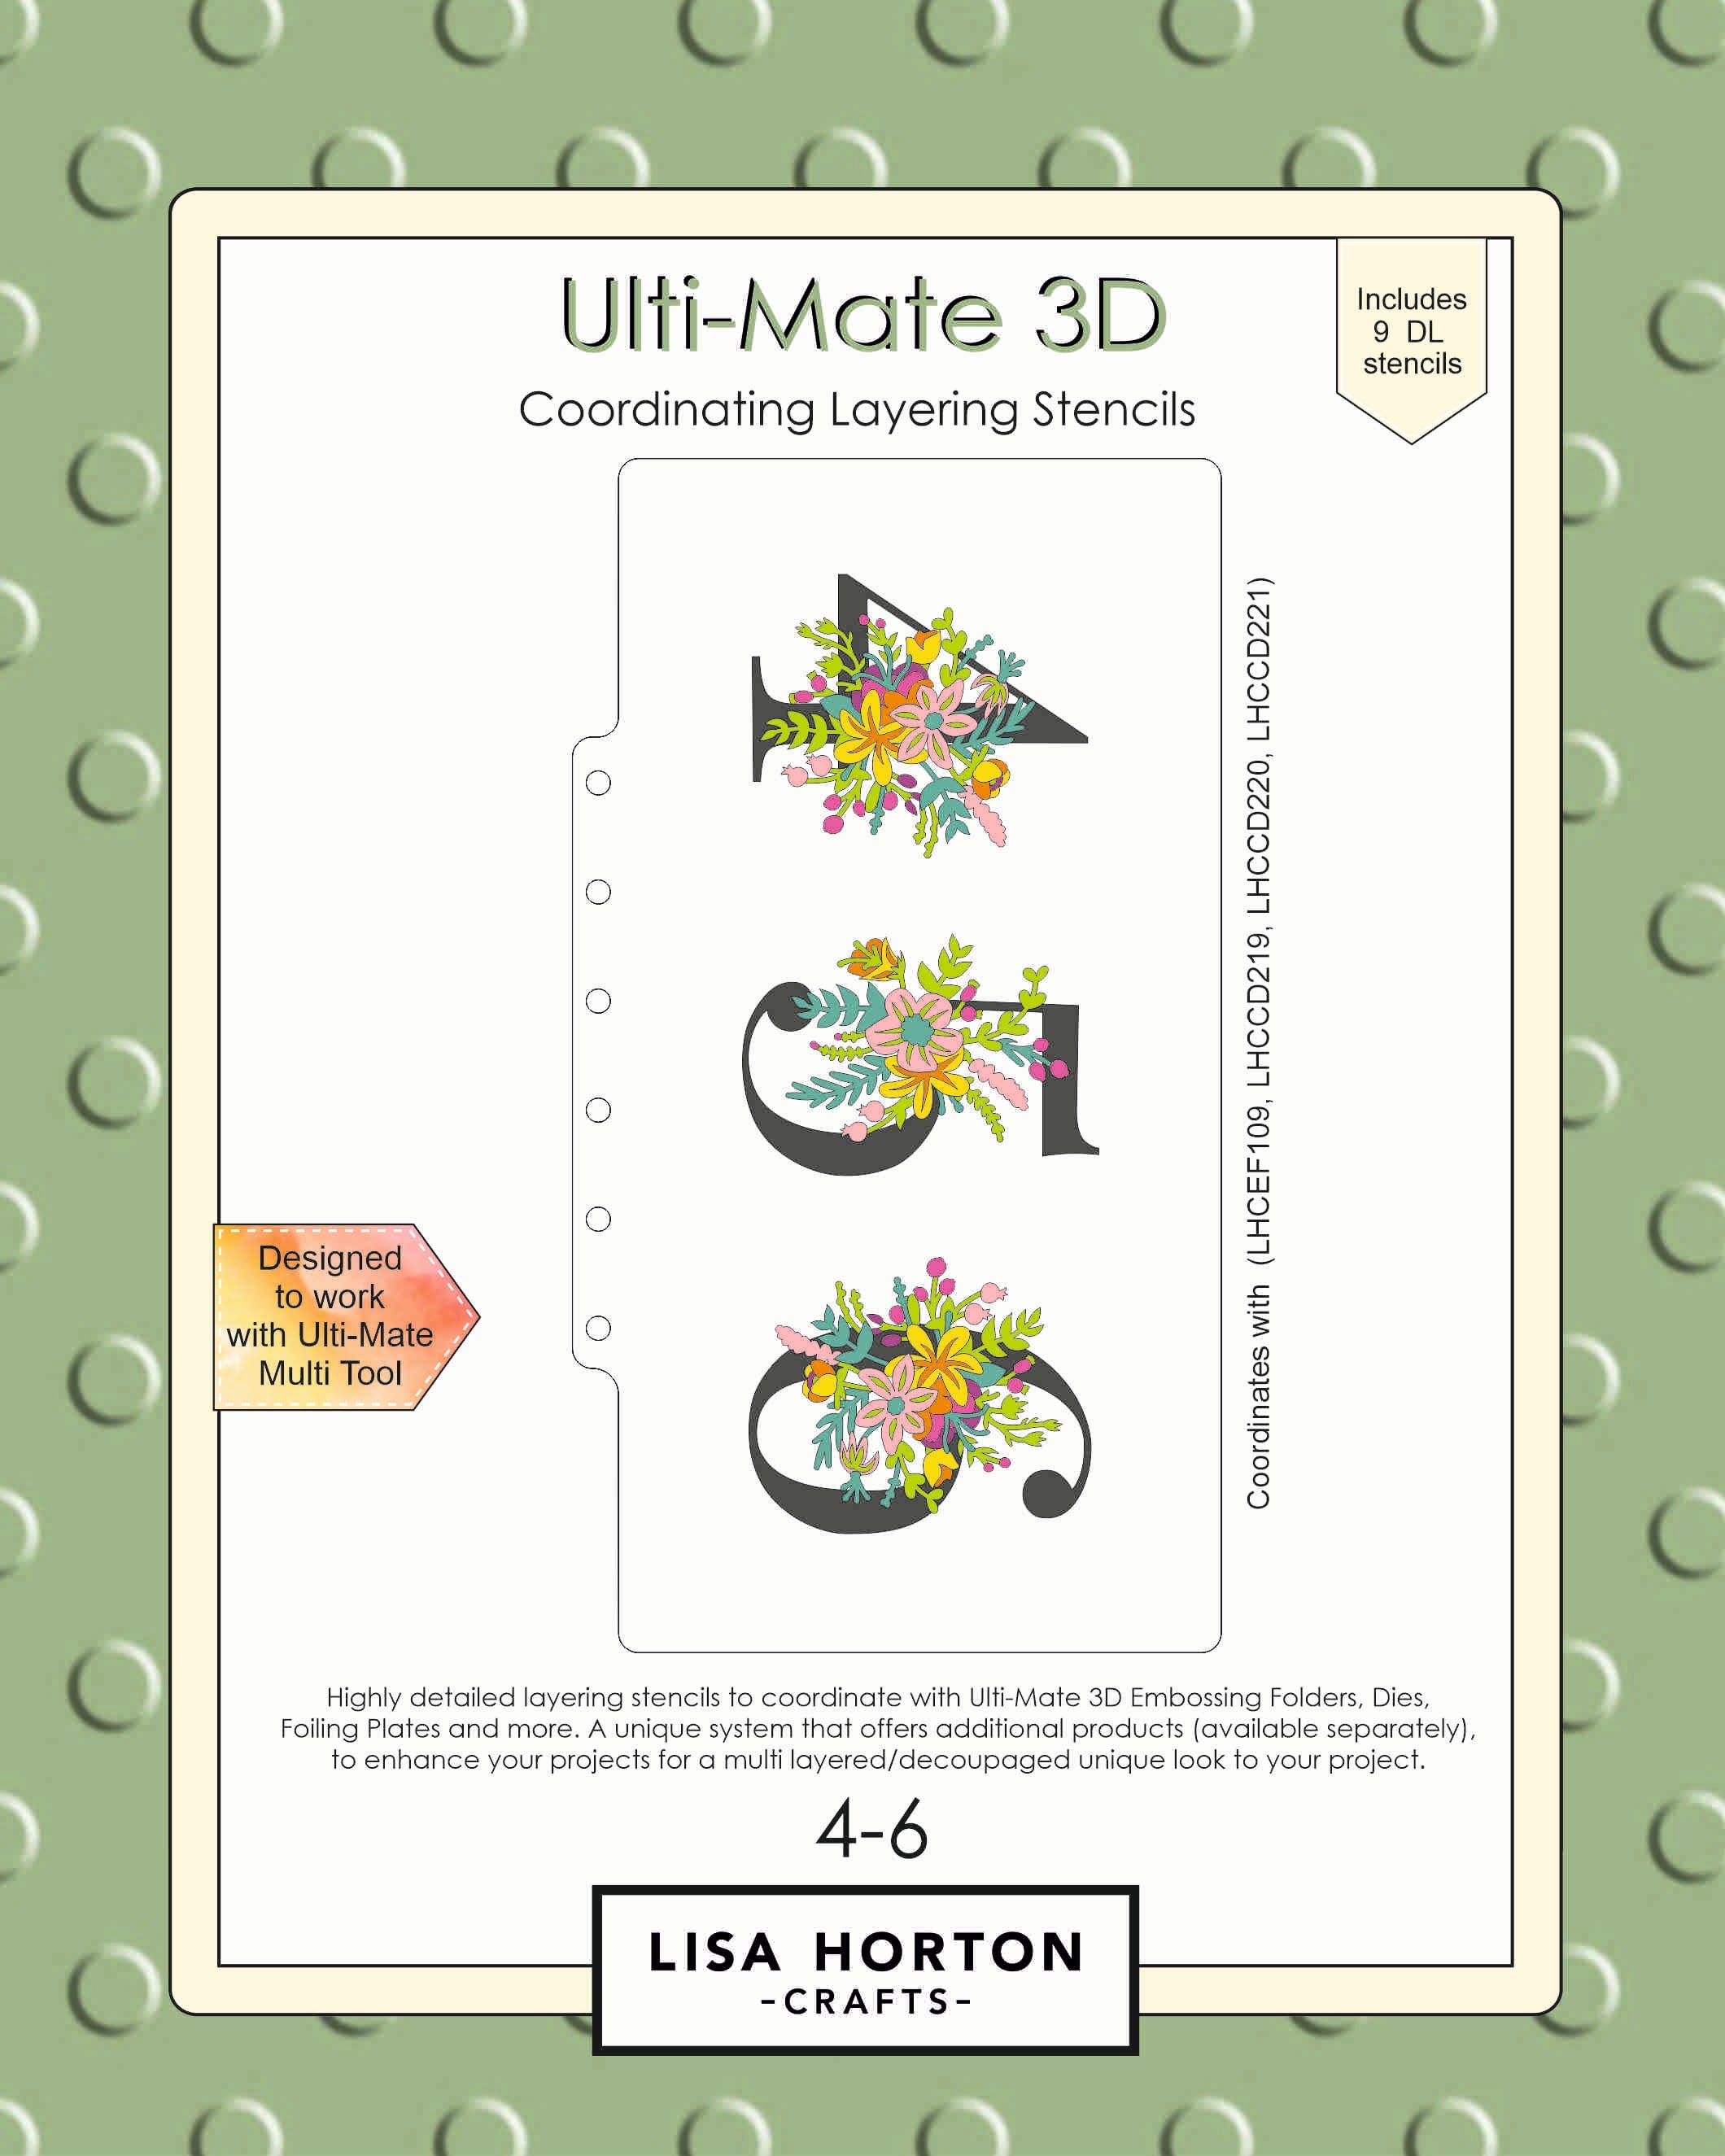 Lisa Horton Crafts Ulti-Mate 3D Slimline Layering Stencils 4-6